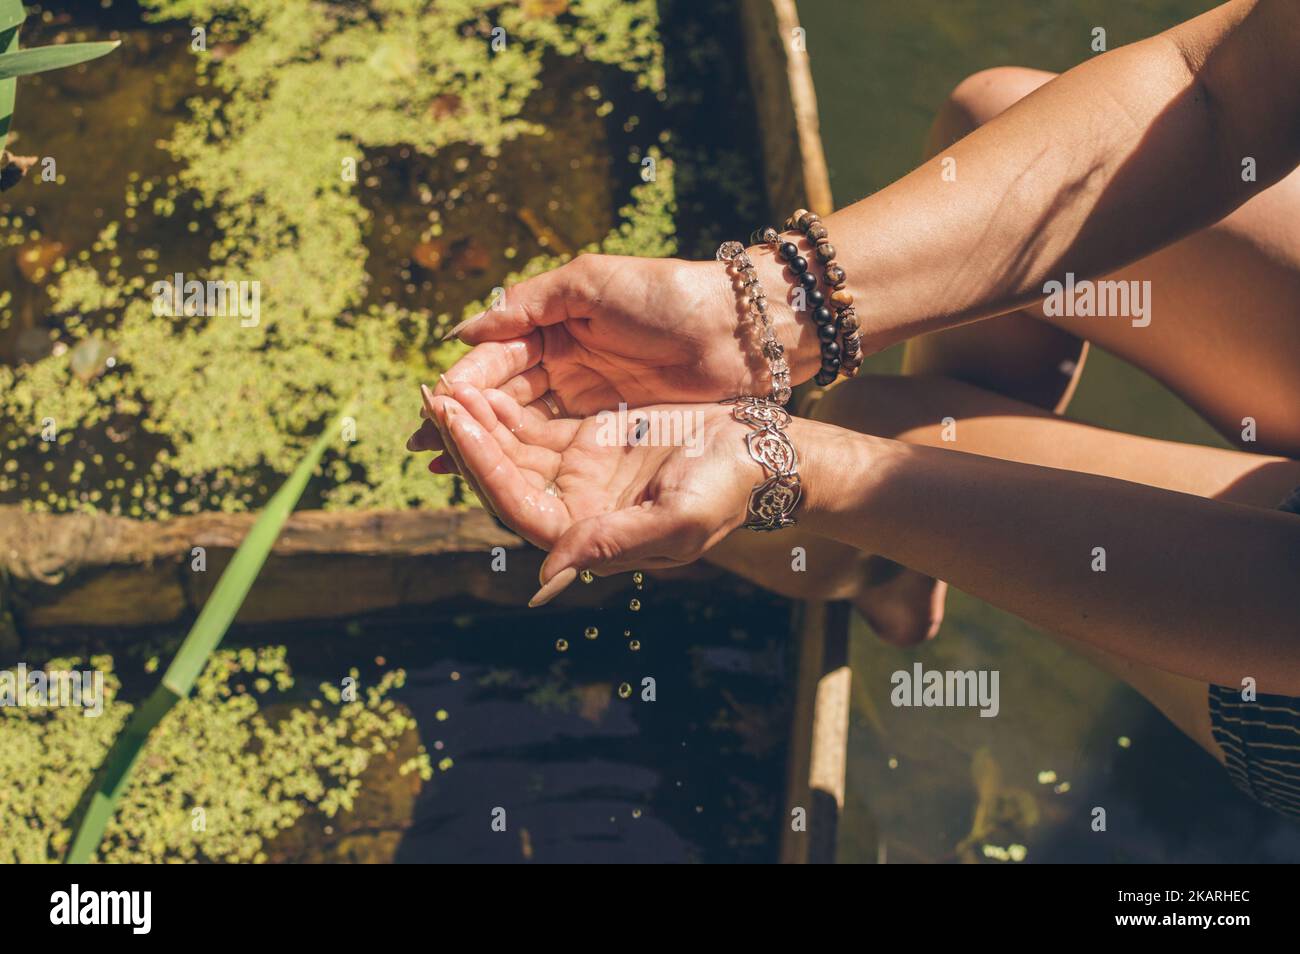 Little snail in woman's hands with bracelets in sunlight Stock Photo